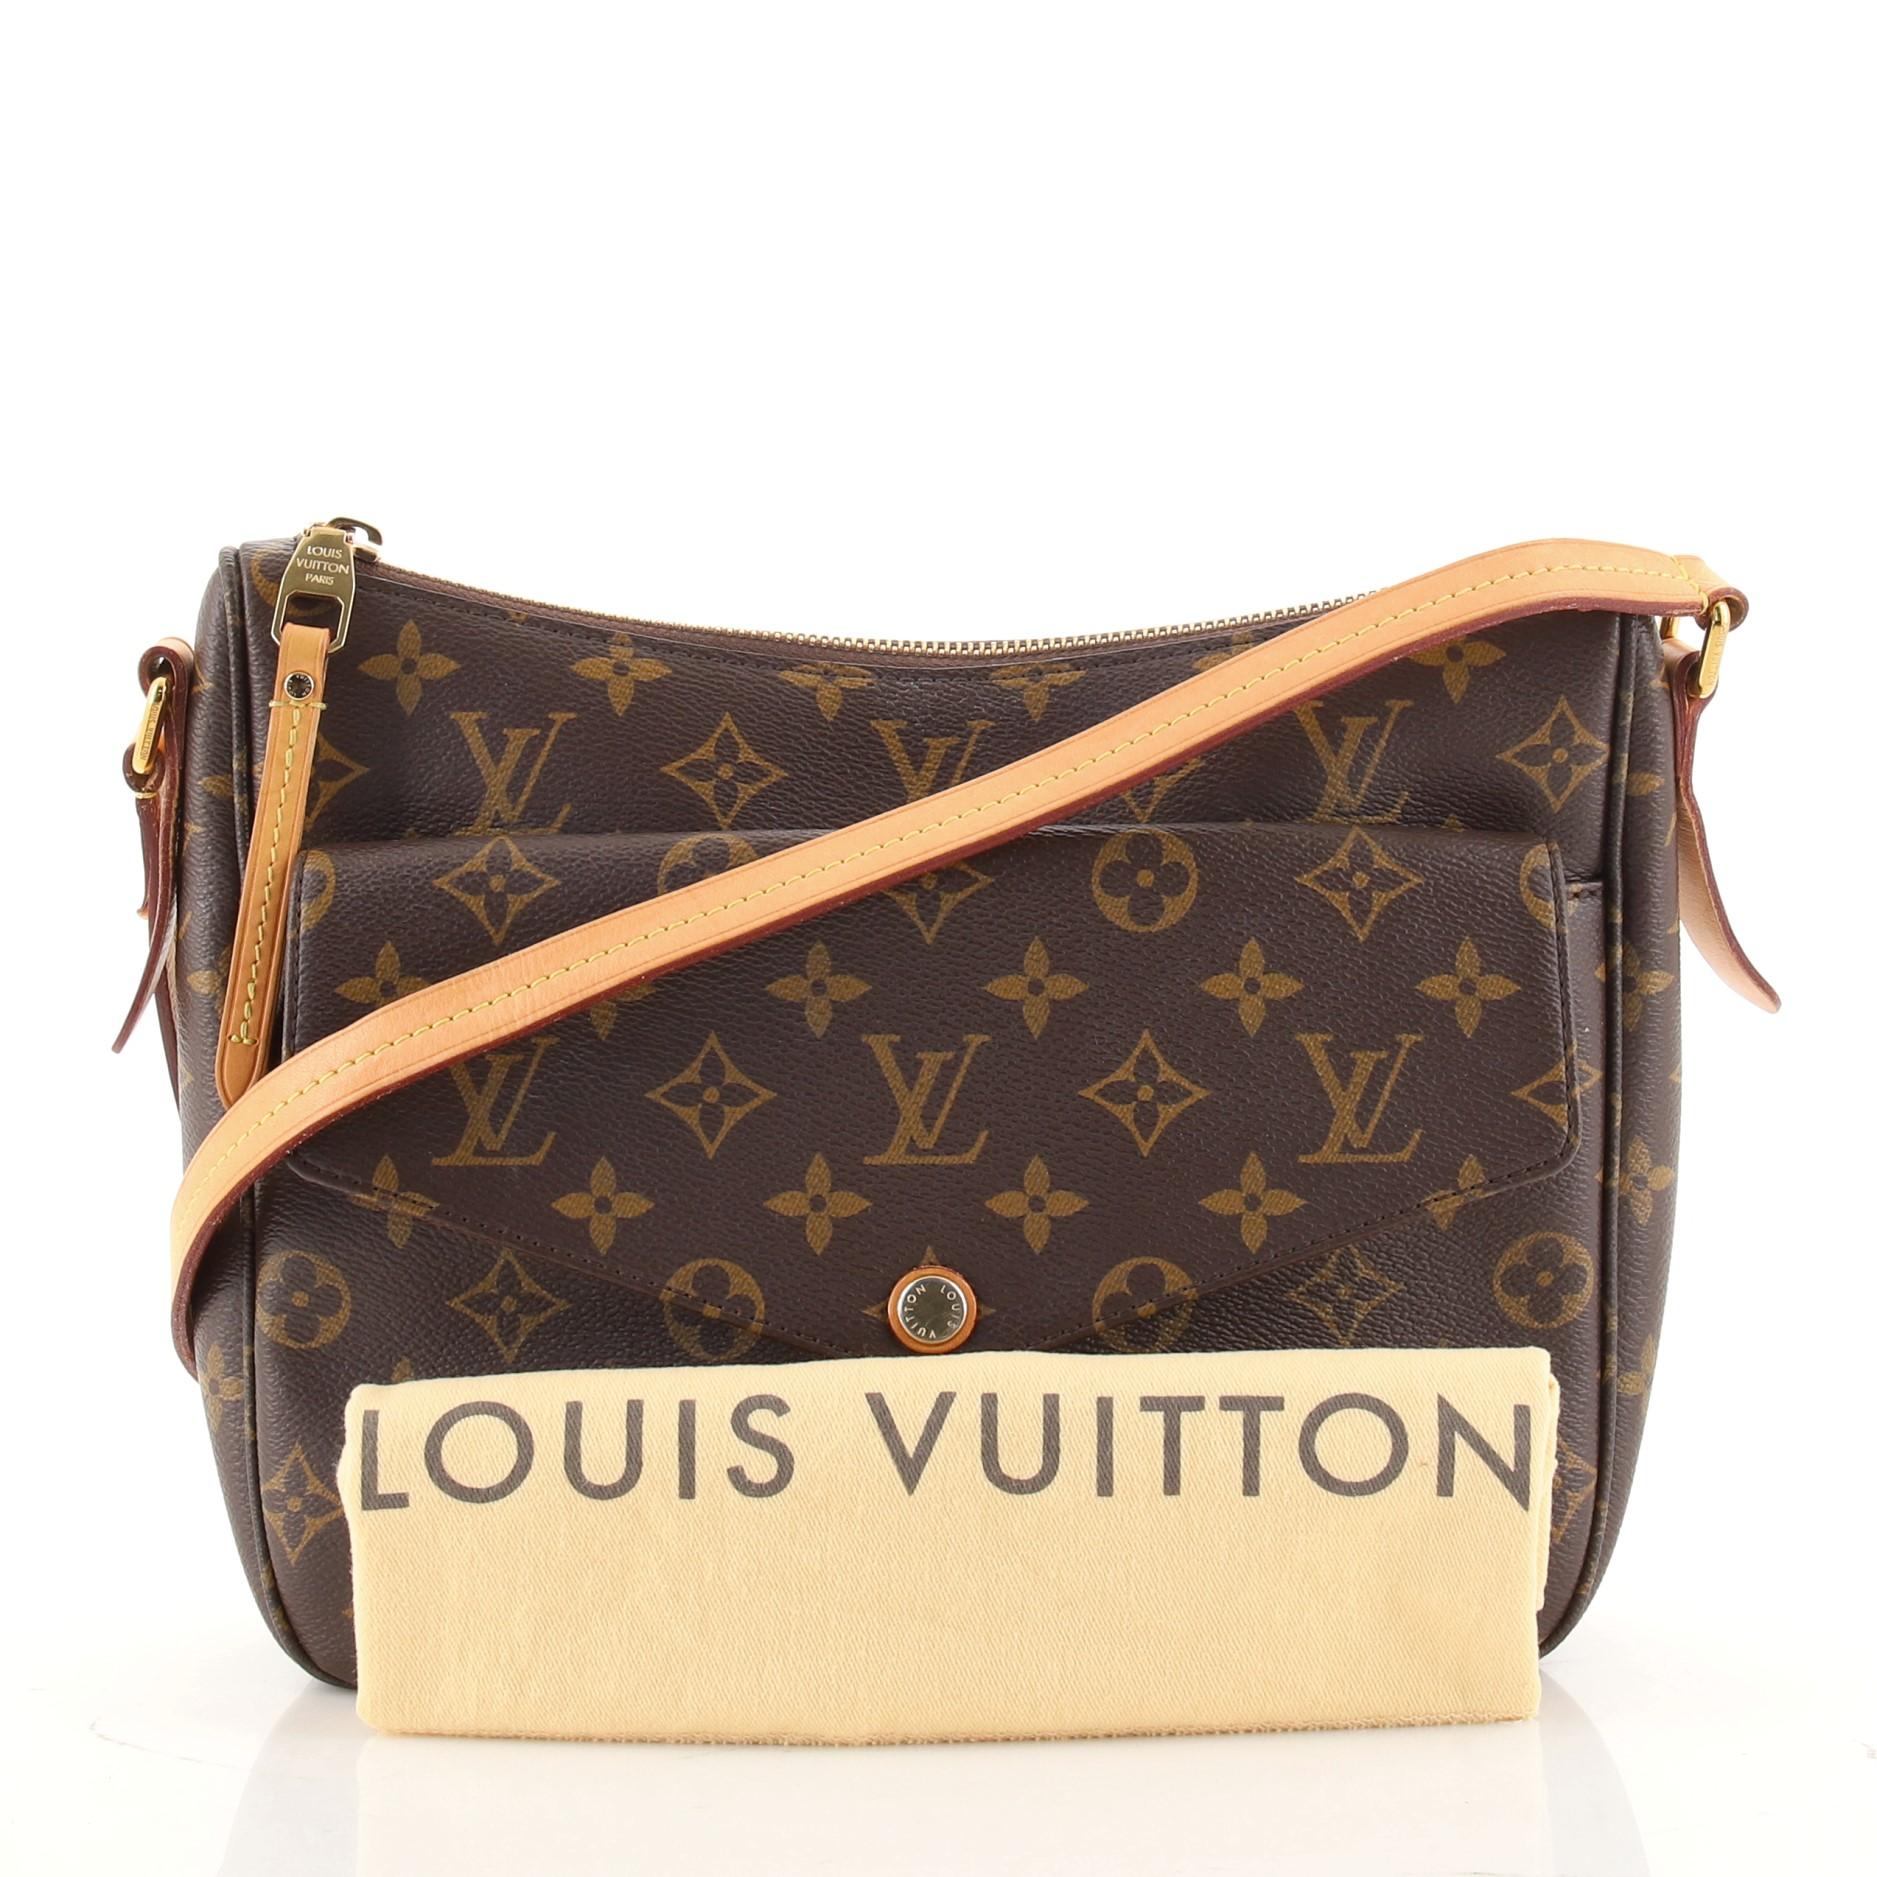 Louis Vuitton Monogram Mabillon - For Sale on 1stDibs